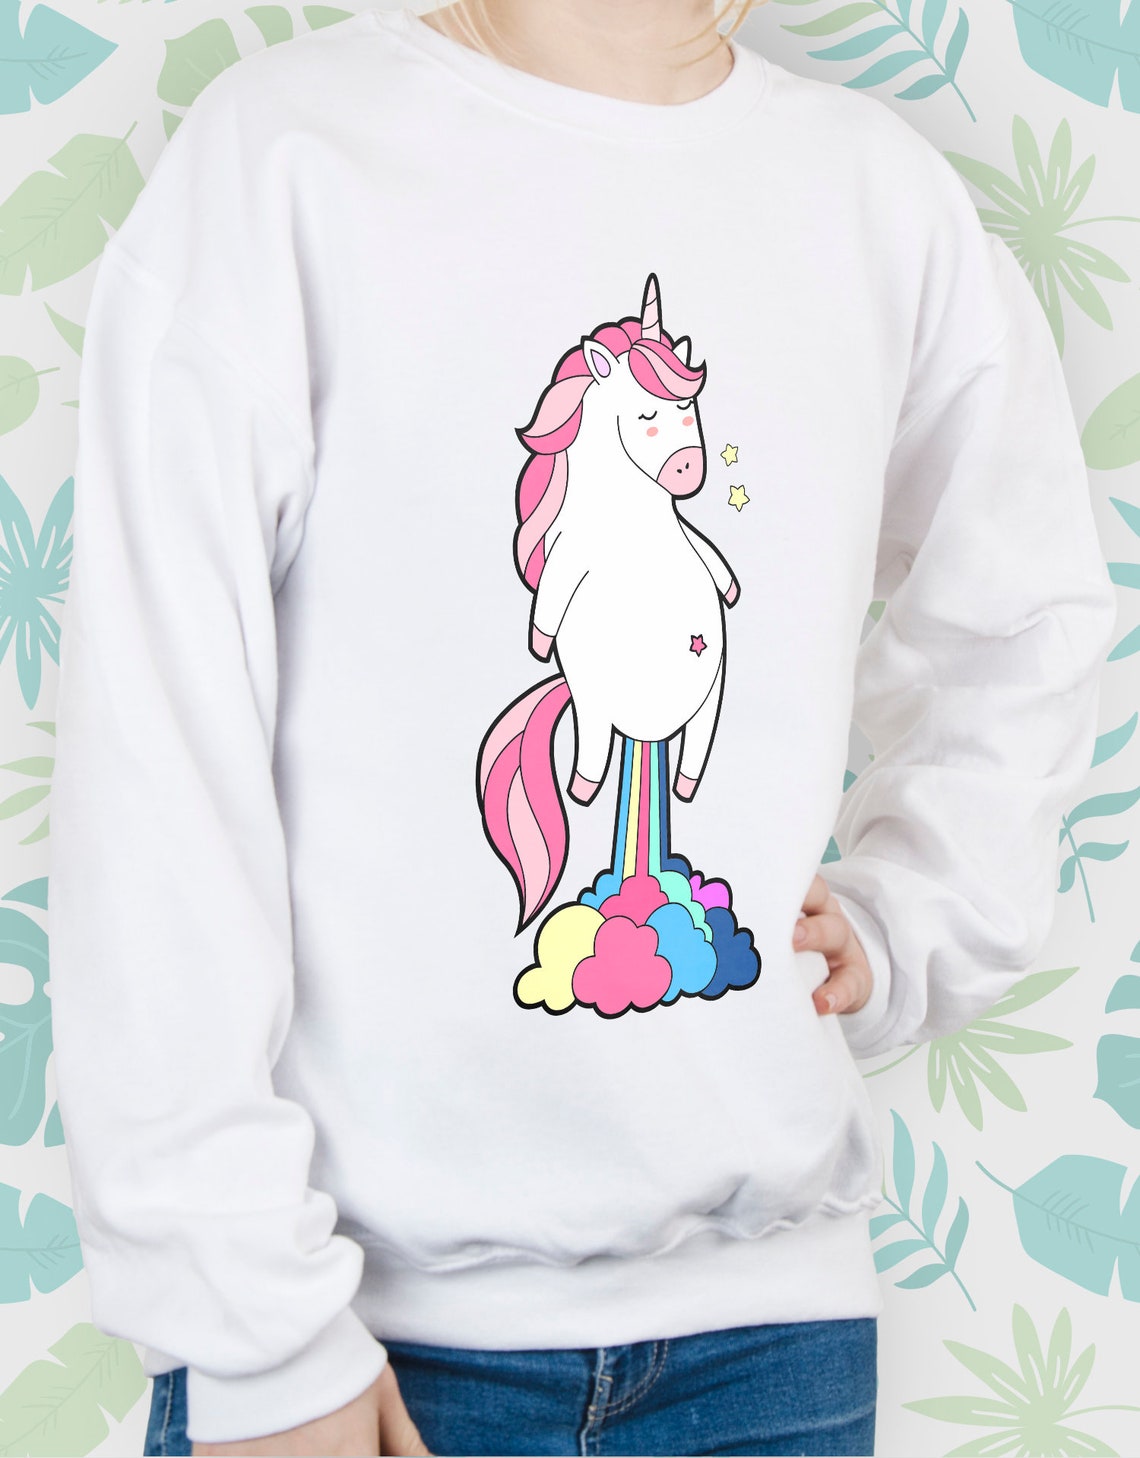 Unicorn sweatshirt for Women Men Girls sweater Cute Kawaii | Etsy